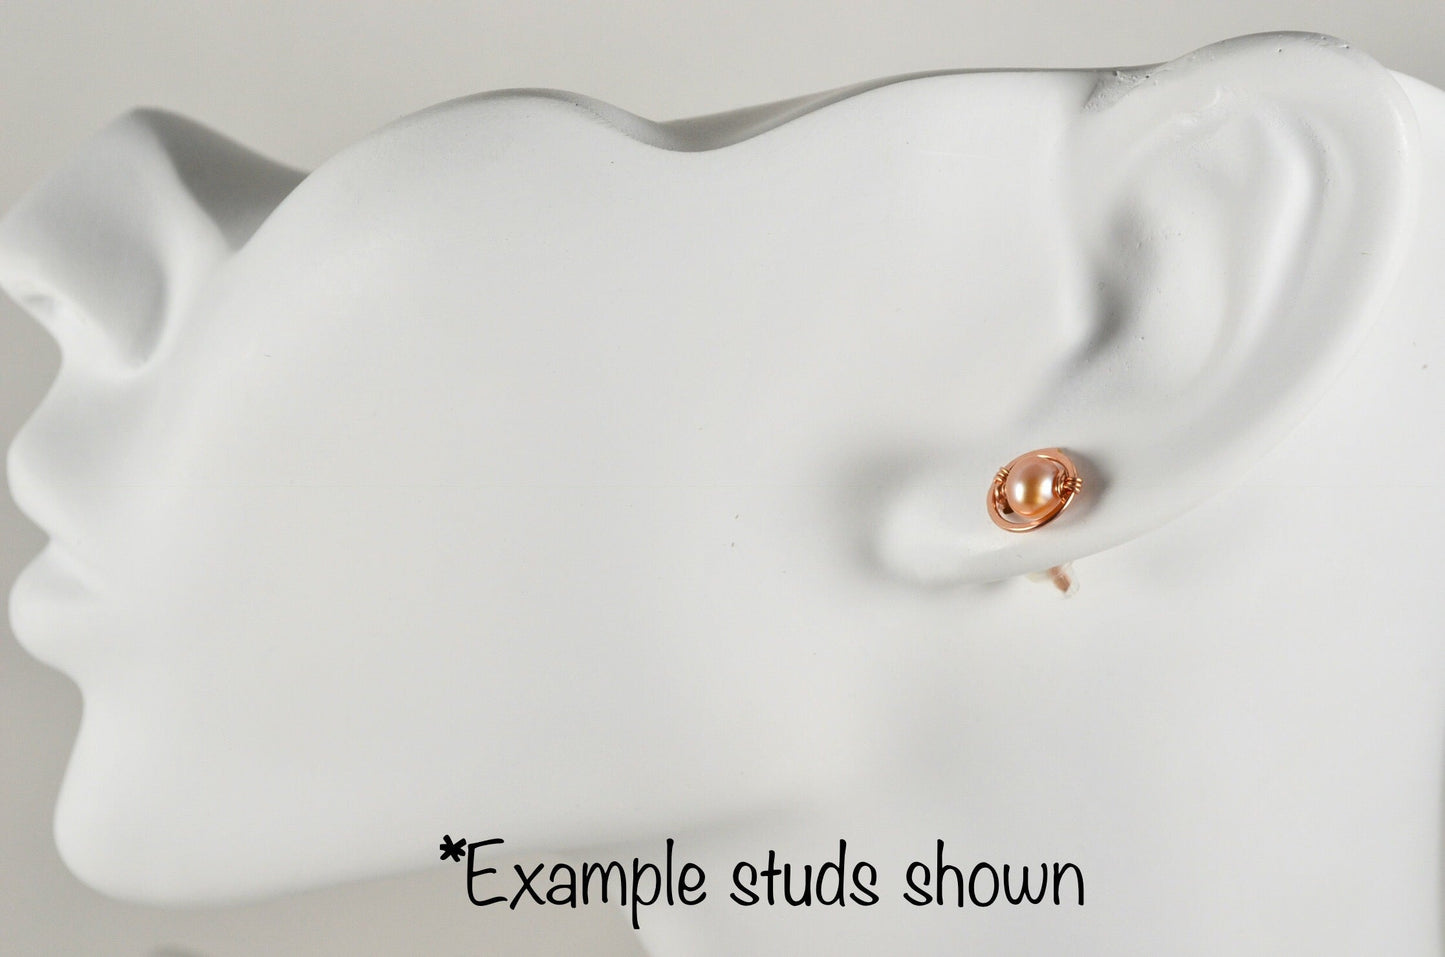 Pistachio Freshwater Pearl Stud earrings in Sterling Silver or 14k Gold Filled